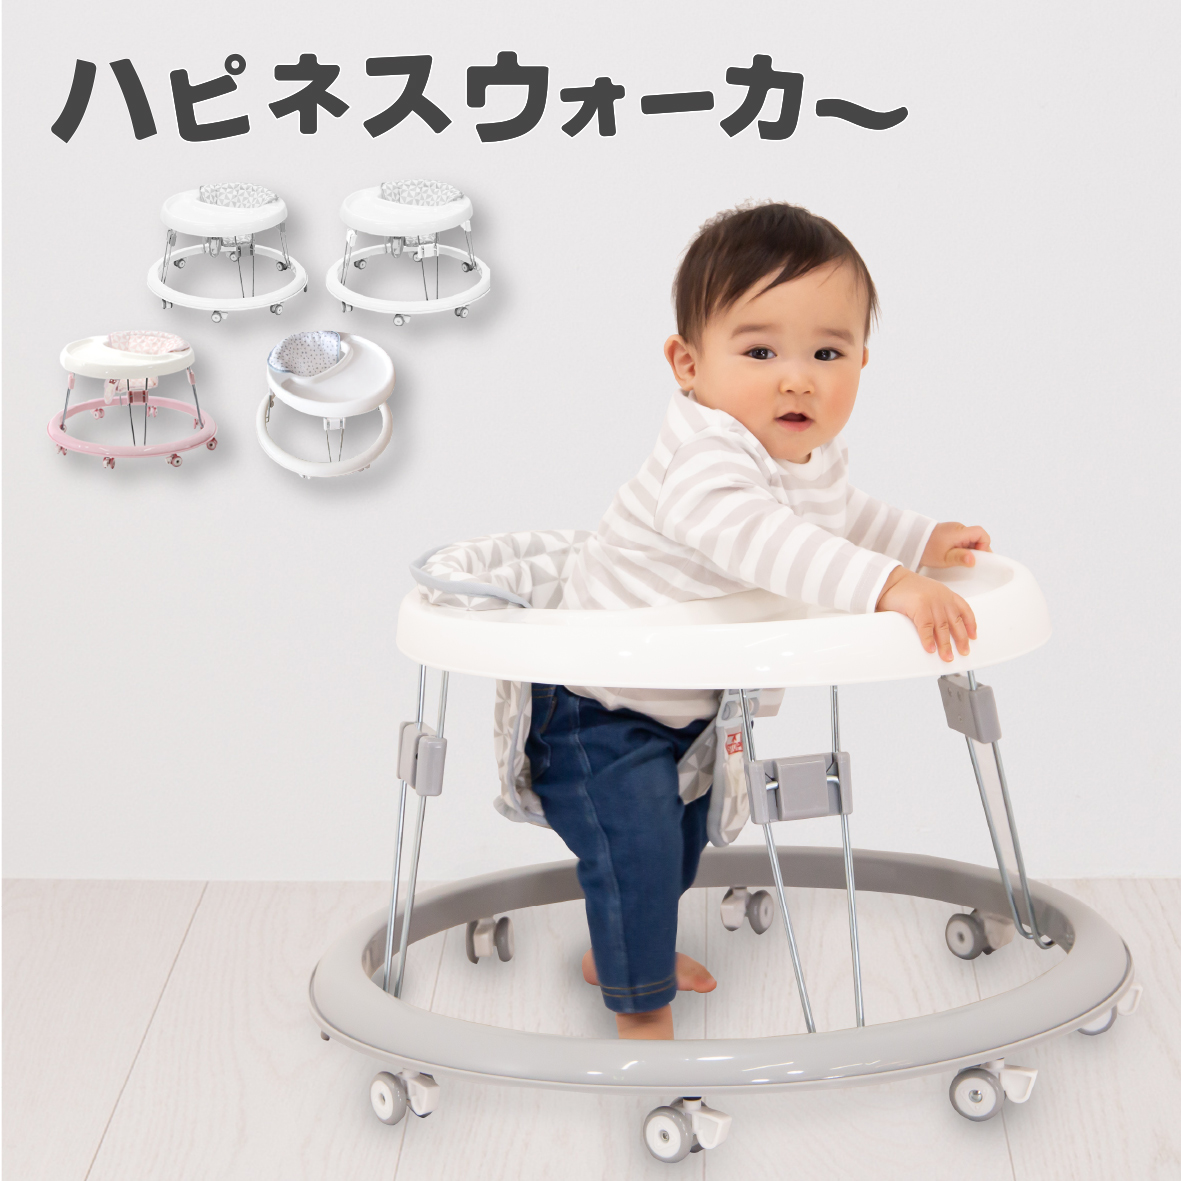  baby-walker baby is pines War car yatomi baby table attaching folding round shape War car baby gray white pink 